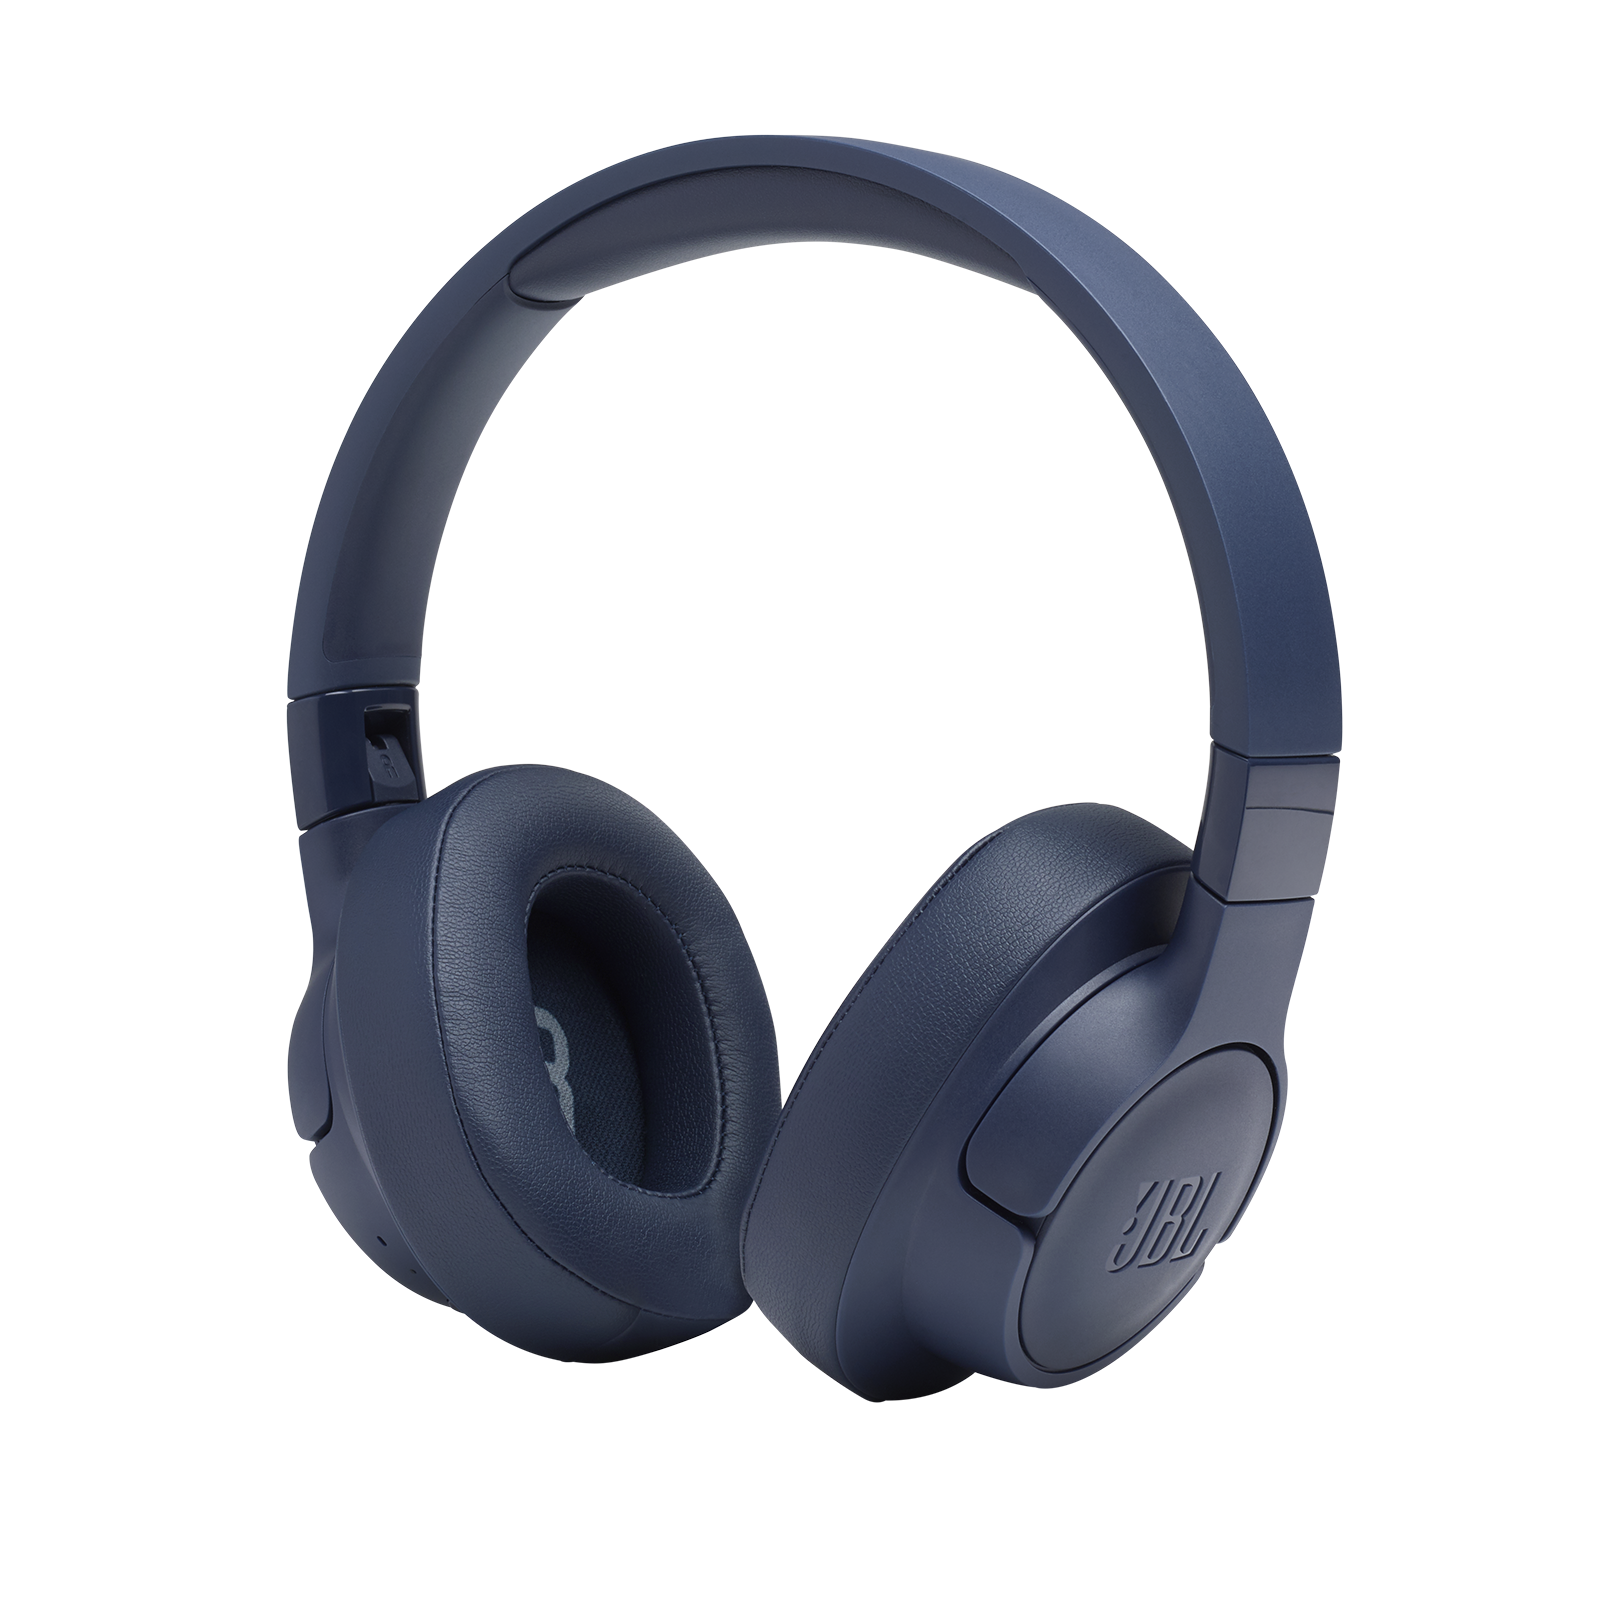 JBL TUNE 700BT - Blue - Wireless Over-Ear Headphones - Detailshot 6